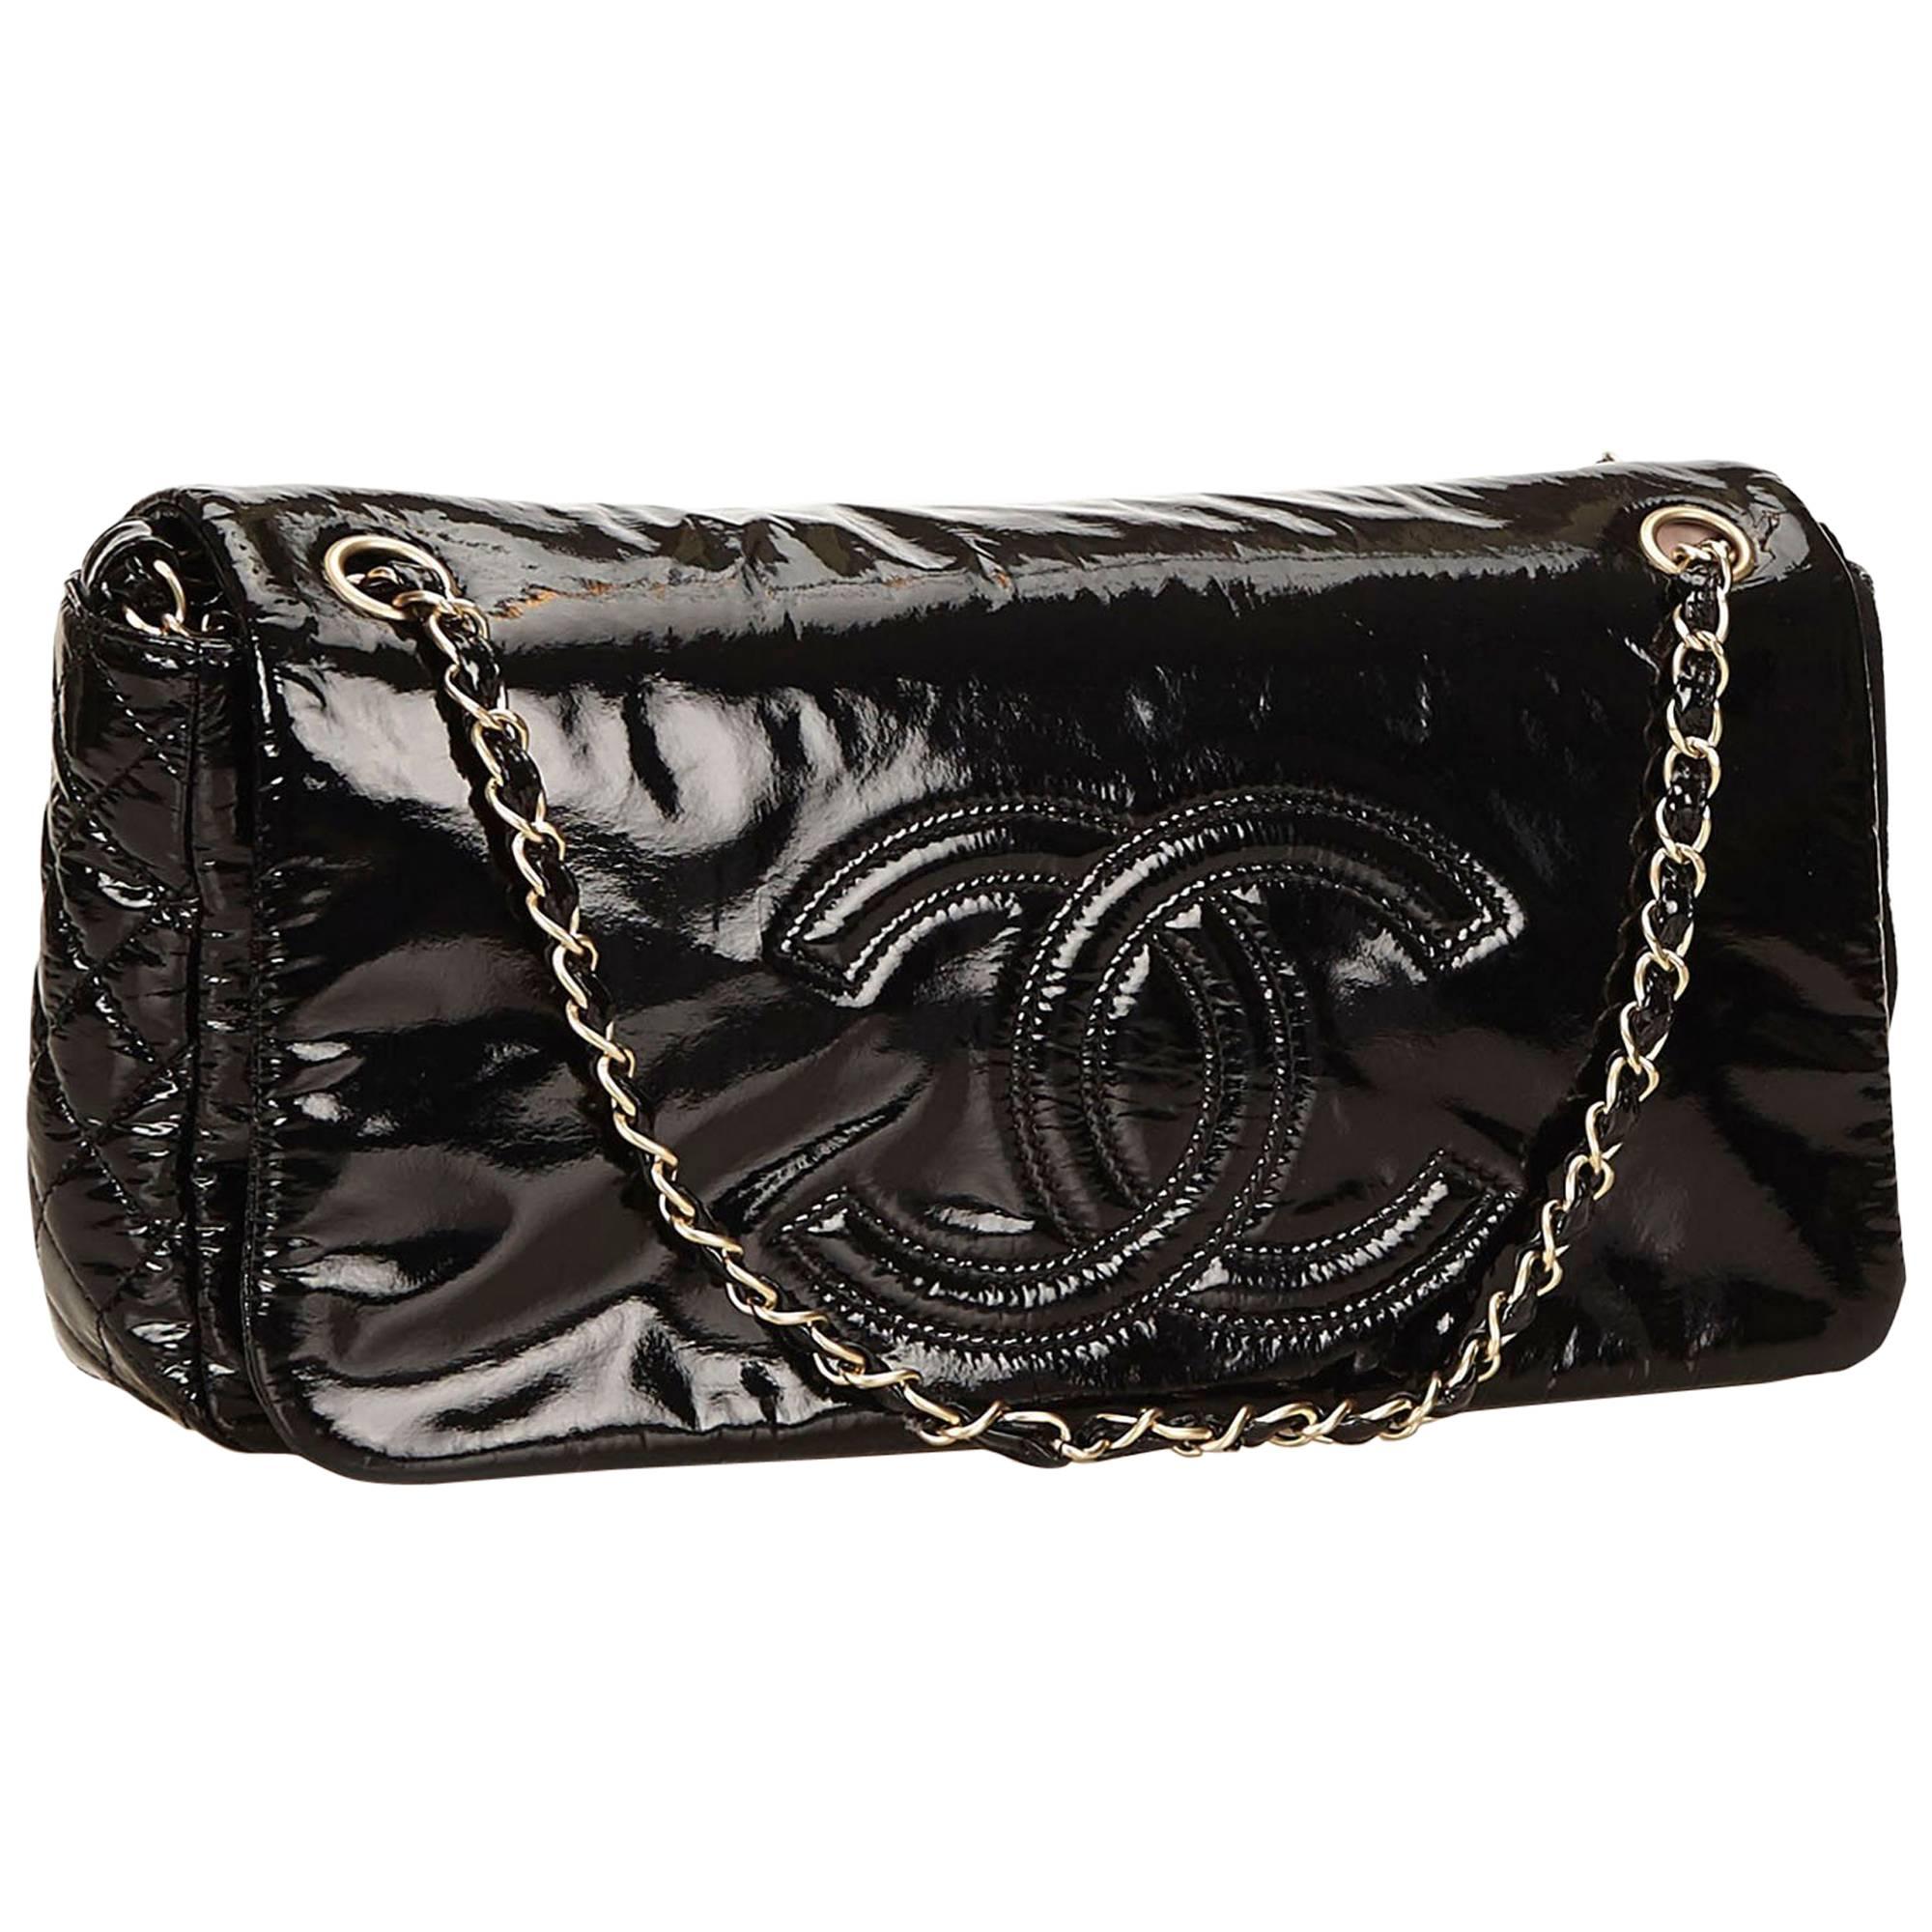 Chanel Black Patent Leather "CC" Logo Flap Shoulder Bag 